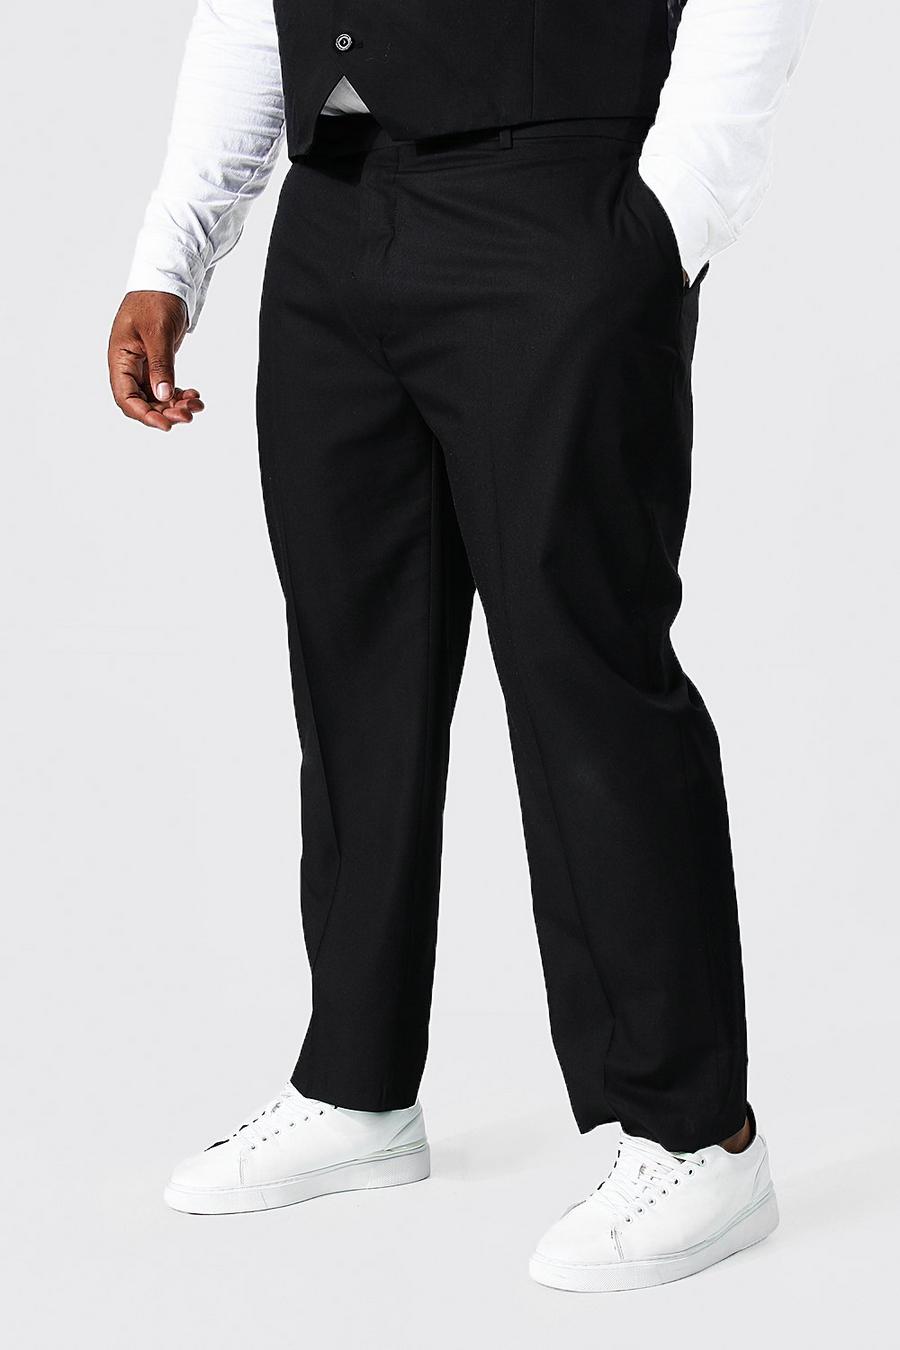 Black schwarz Plus Size Slim Fit Pantalons